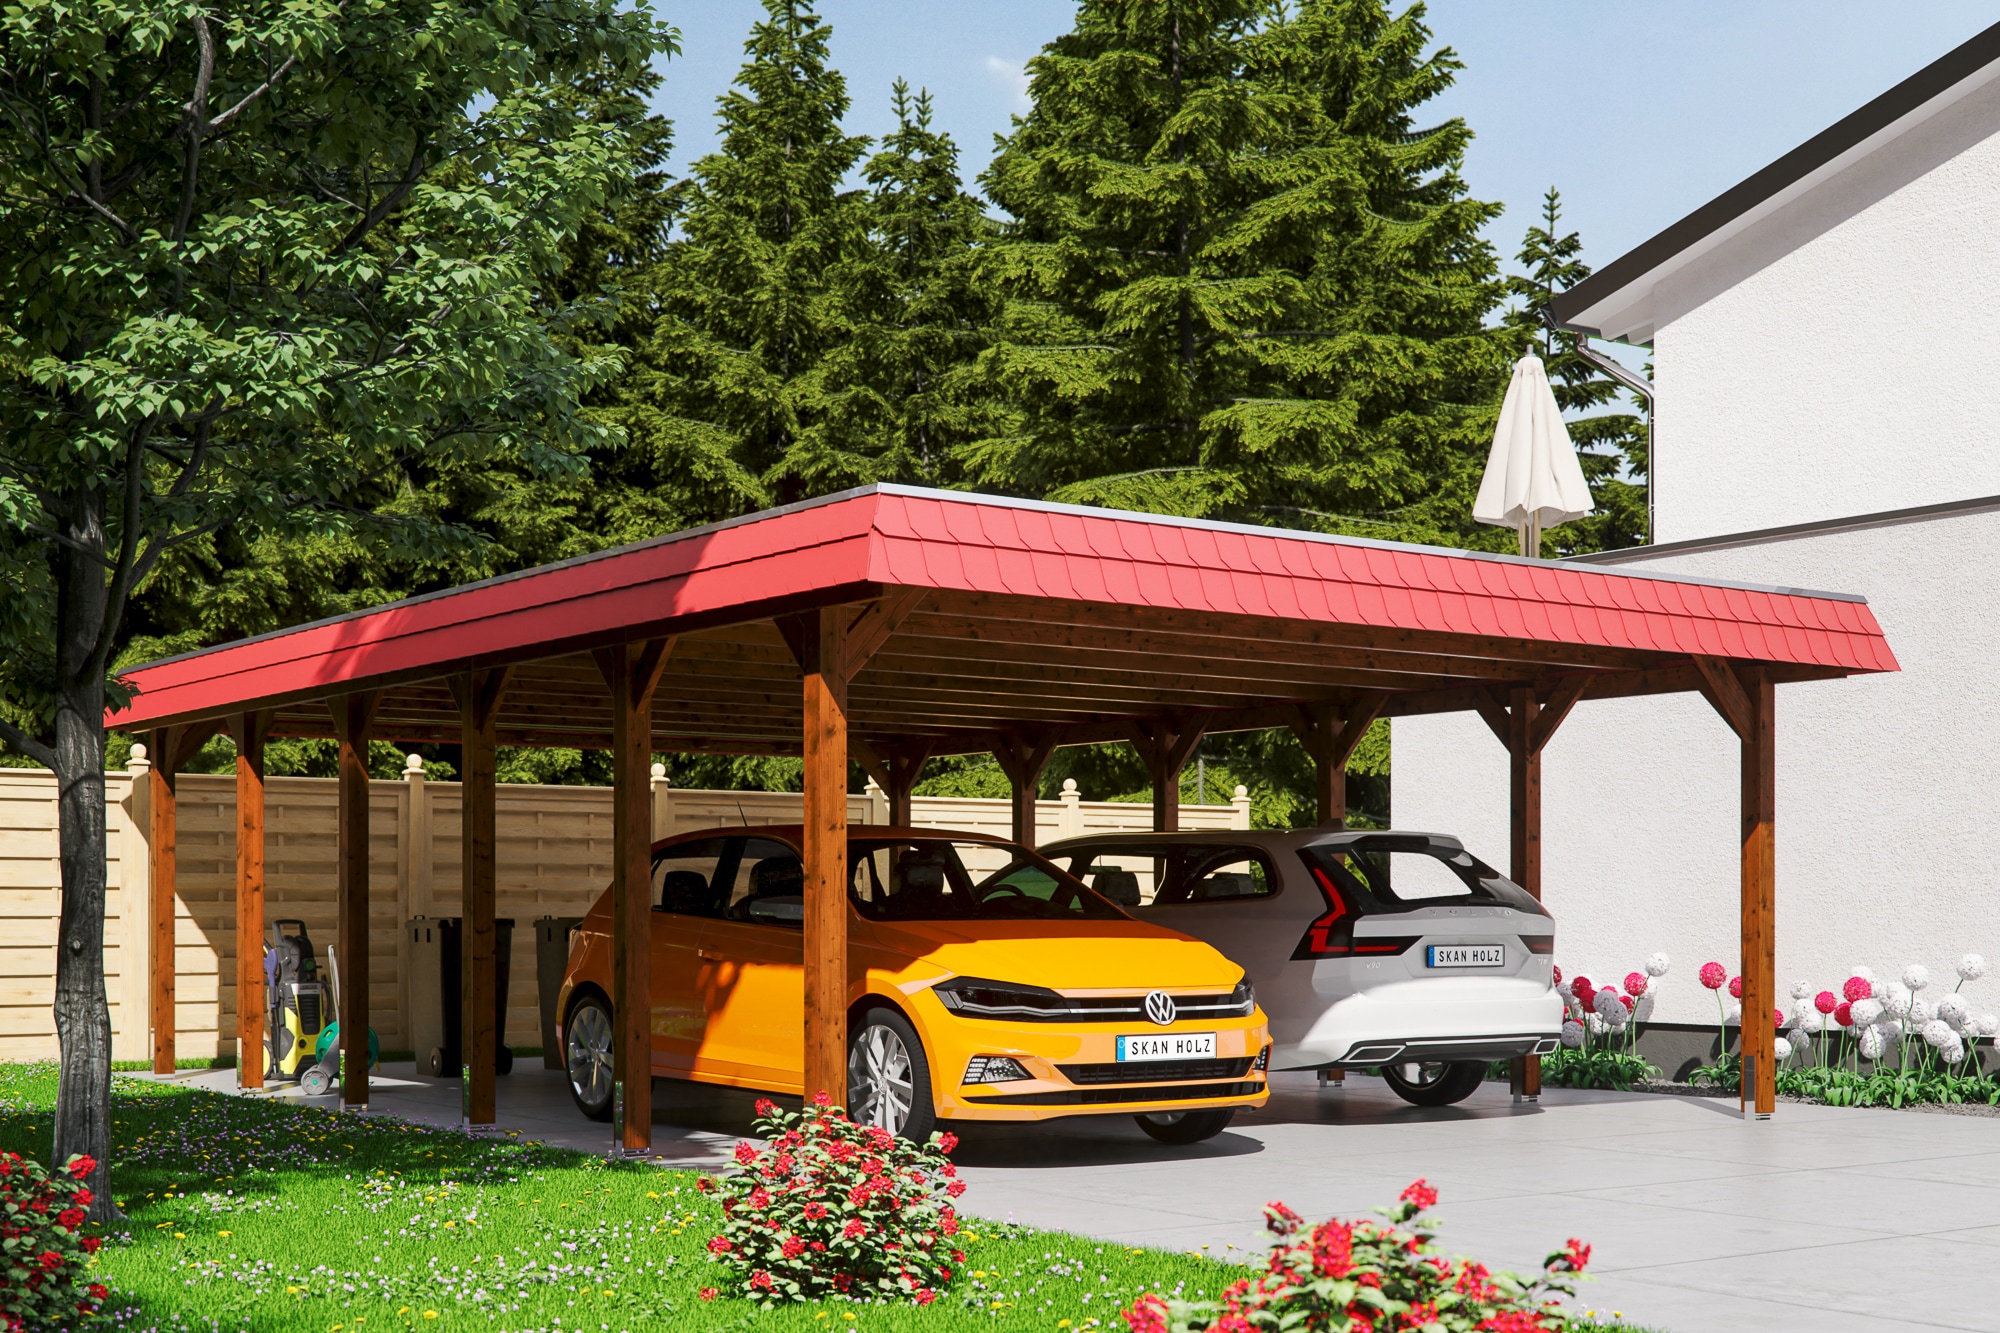 Skanholz Doppelcarport »Spreewald«, Nadelholz, 530 cm, Nussbaum, 585x893cm mit EPDM-Dach, rote Blende